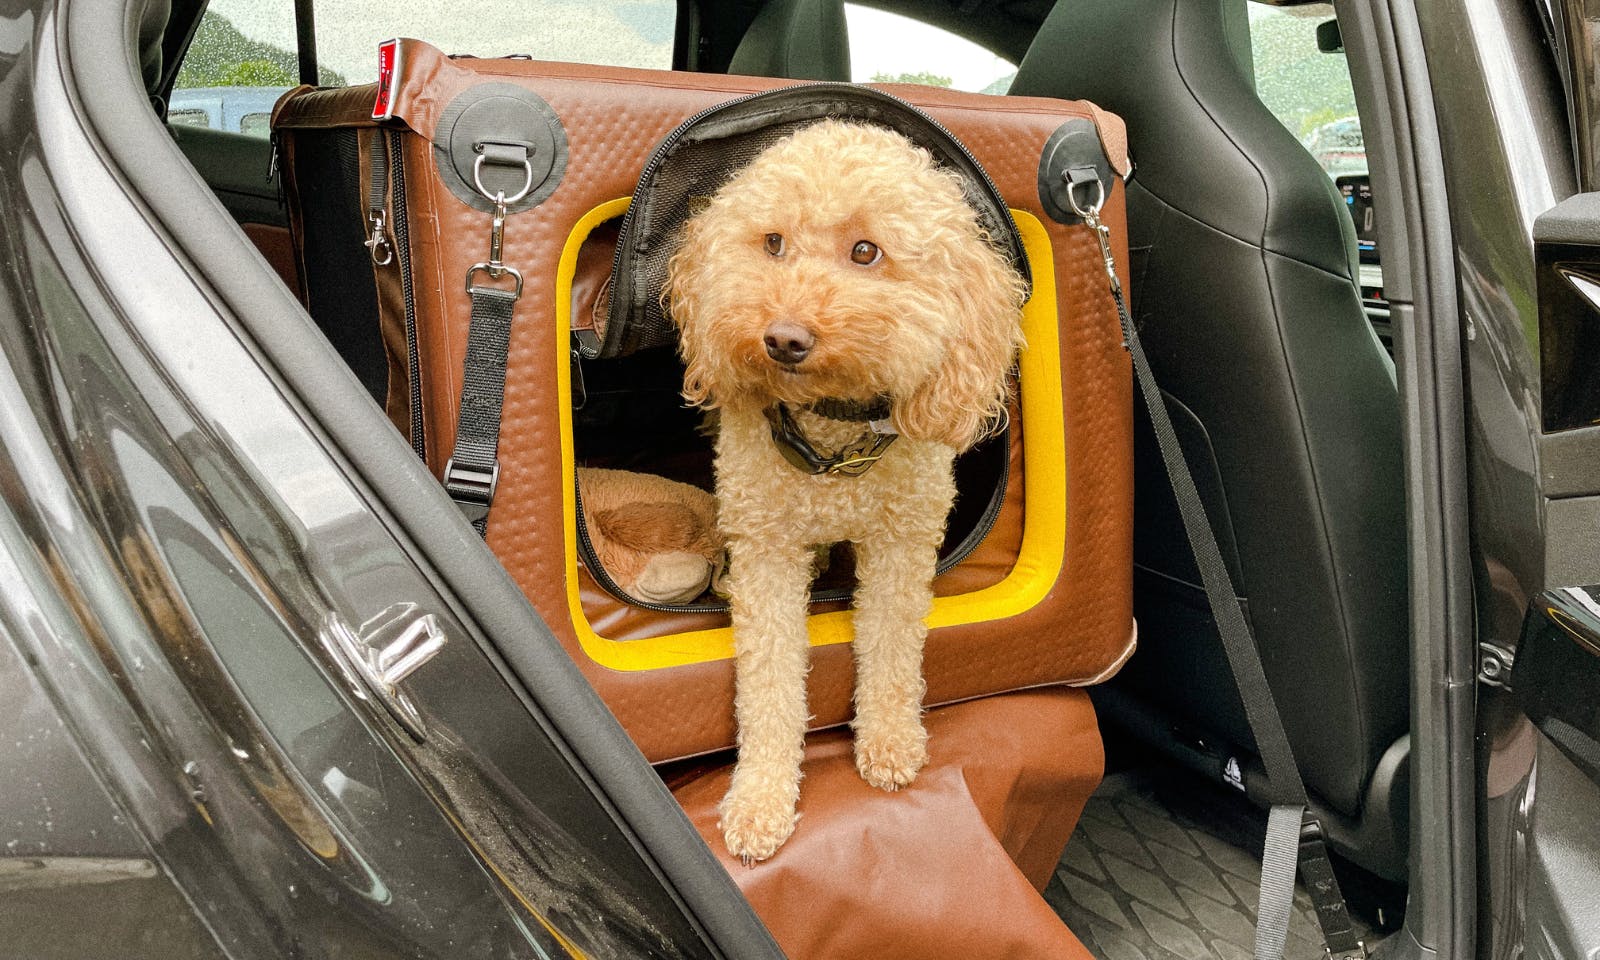 Tami Hundebox - Sichere Hundetransportbox für den VW ID.4